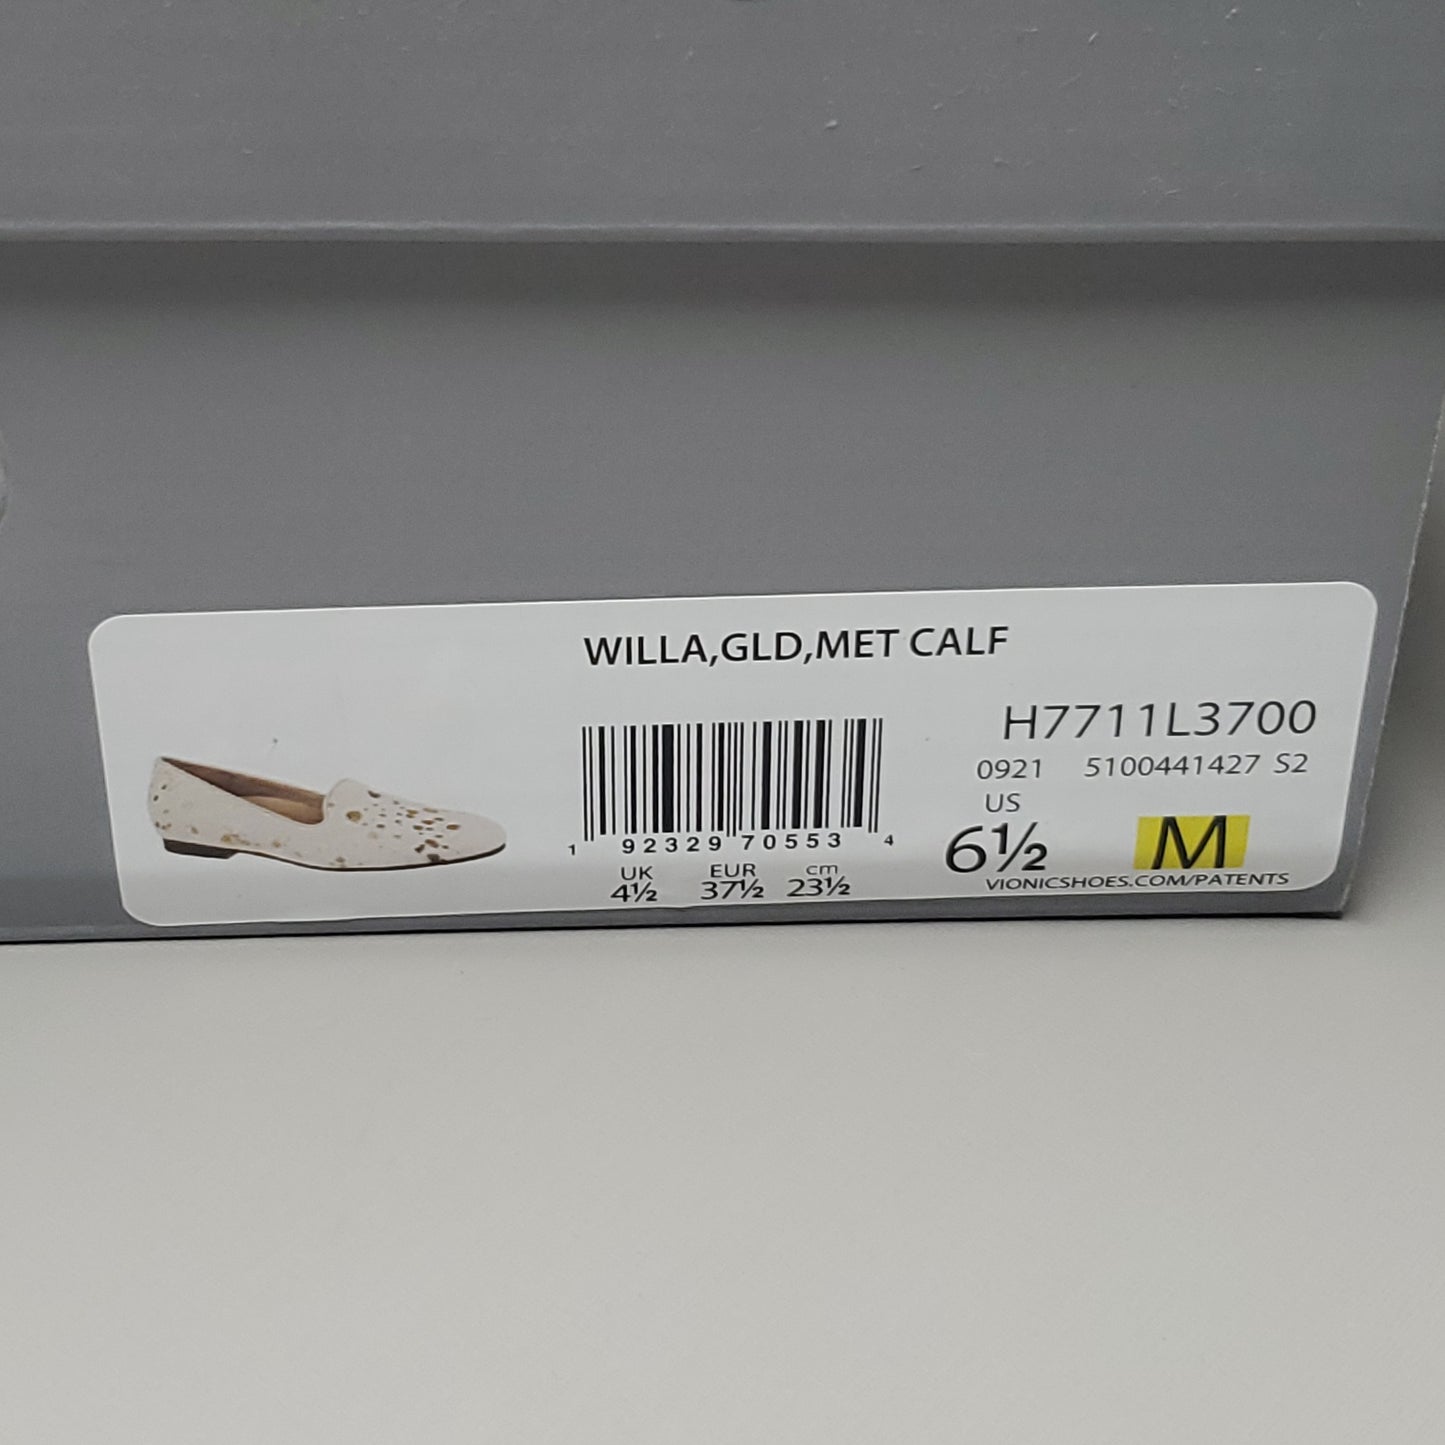 VIONIC Willa Slip On Loafer Flat Shoe Women's Sz 6.5 Gold Metallic H7711L3700 (New)